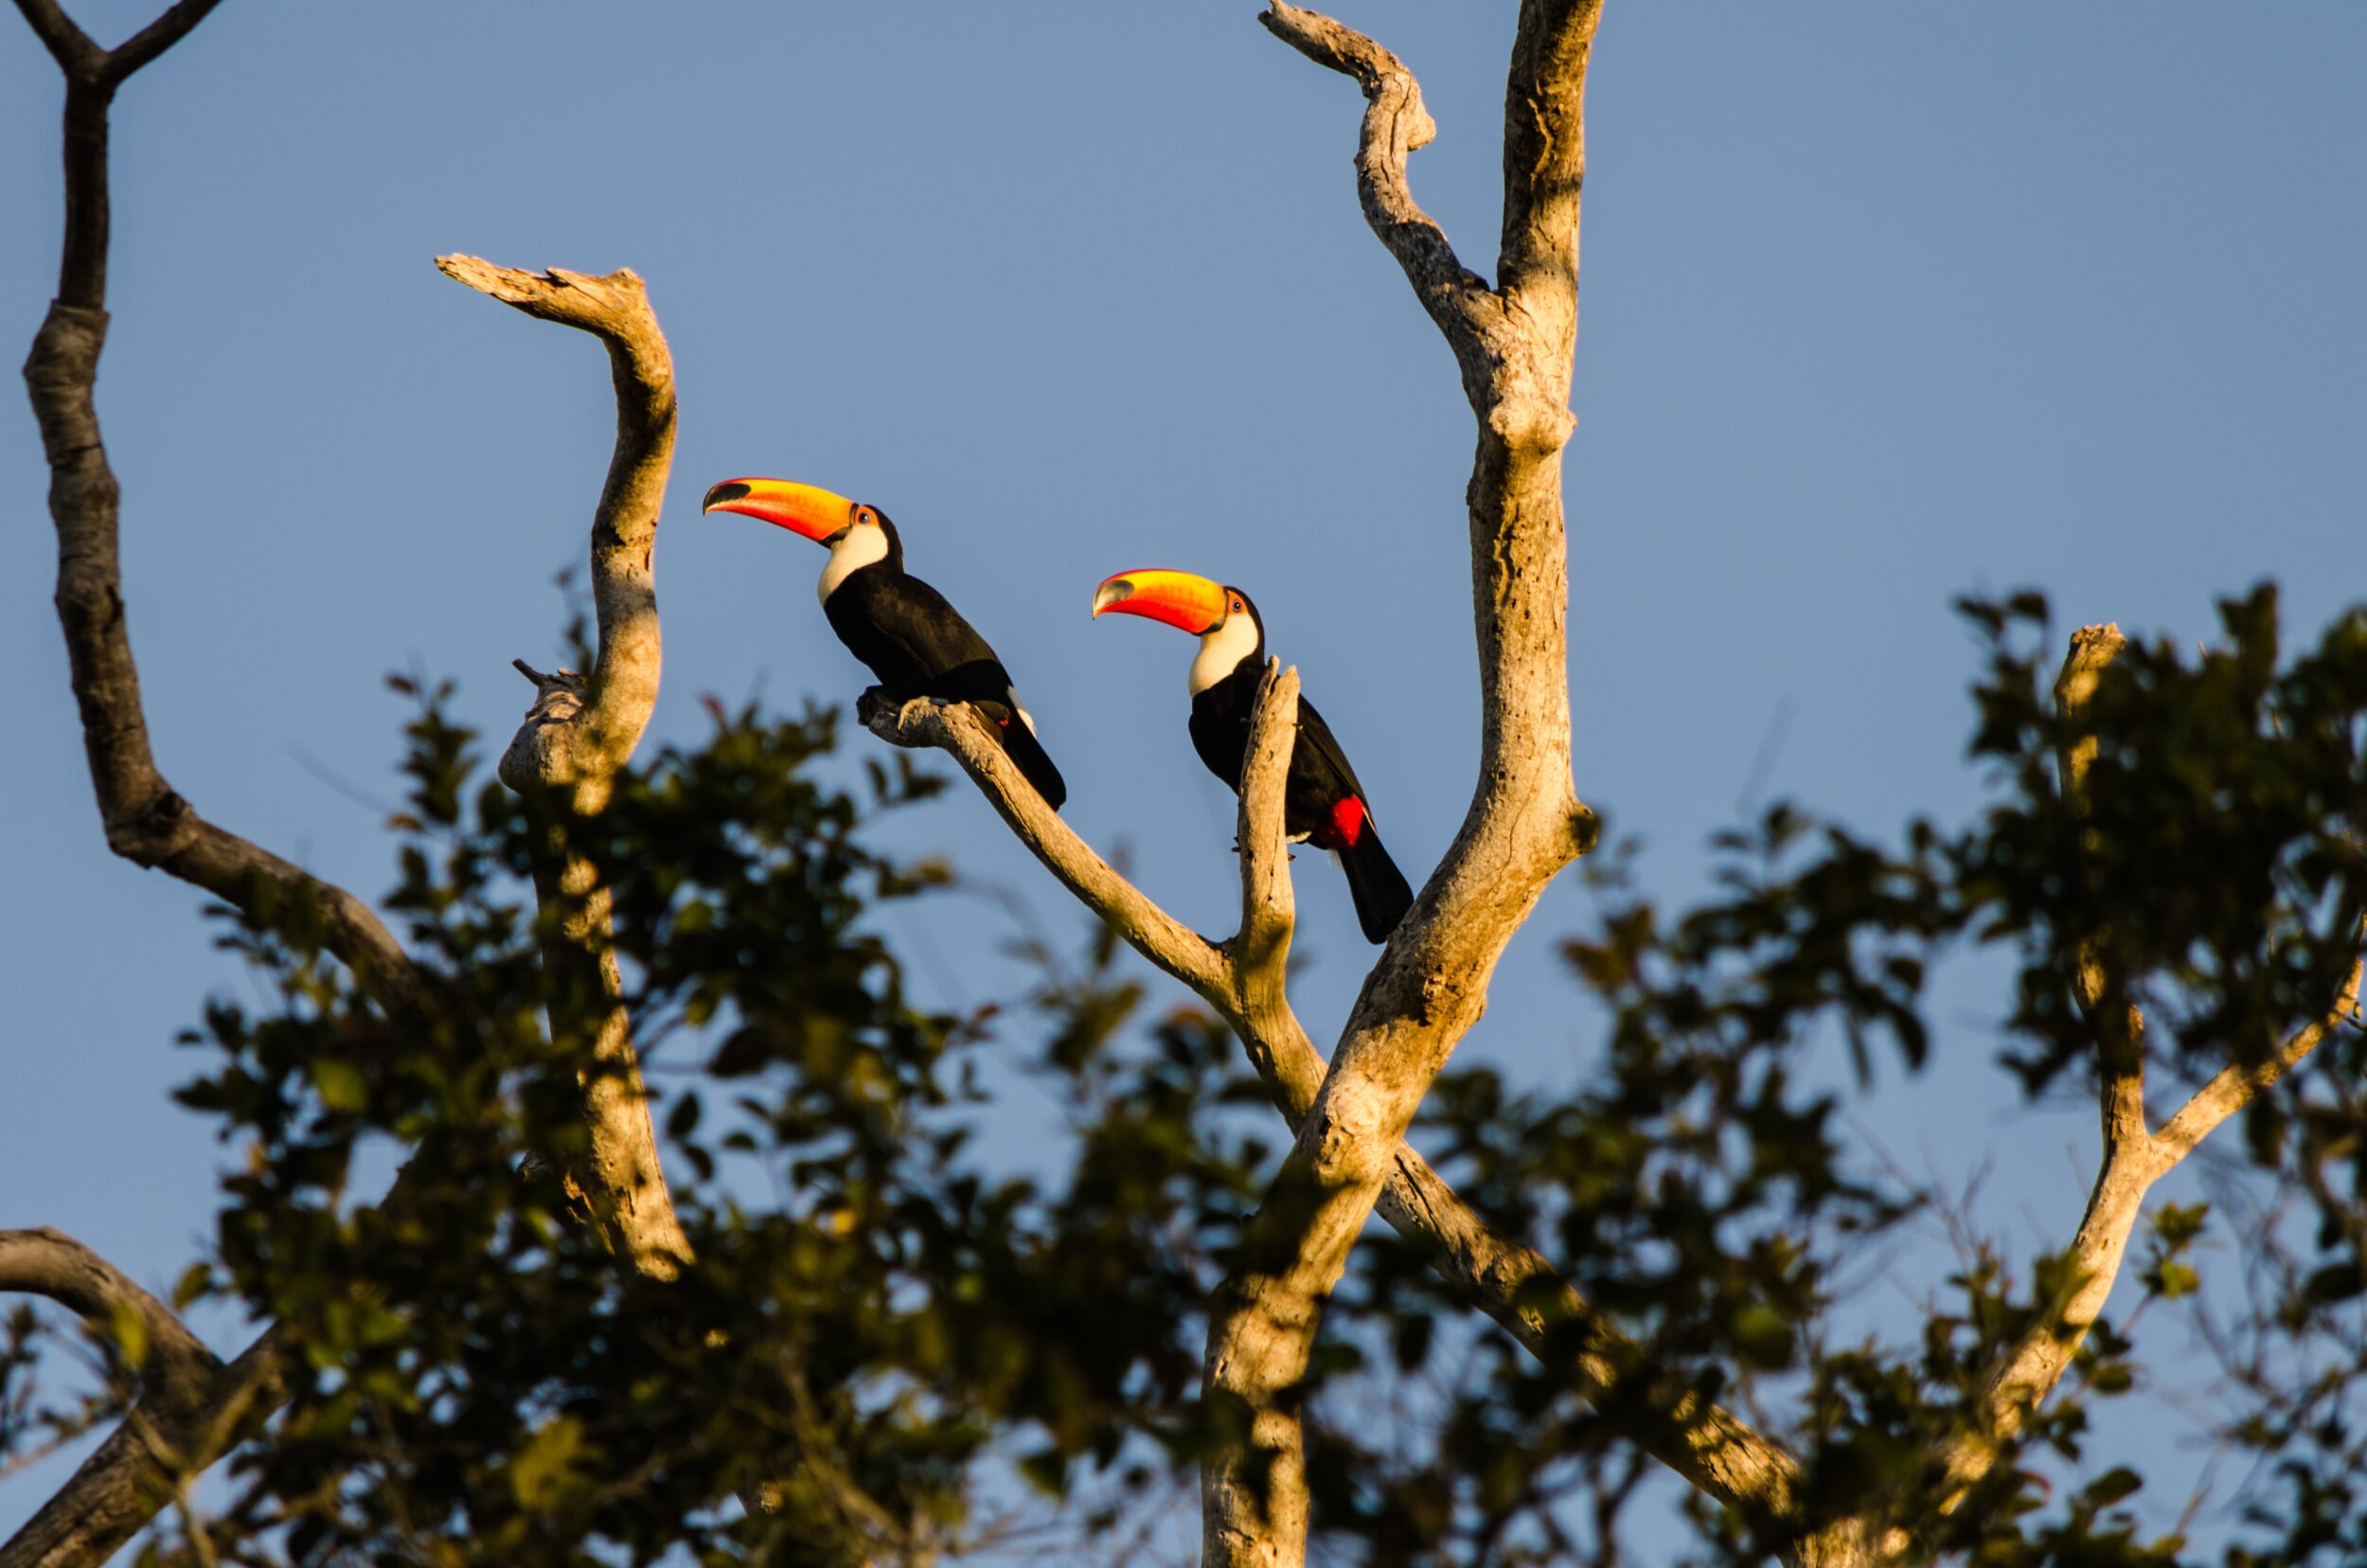 The Pantanal in Brazil is rich in birdlife